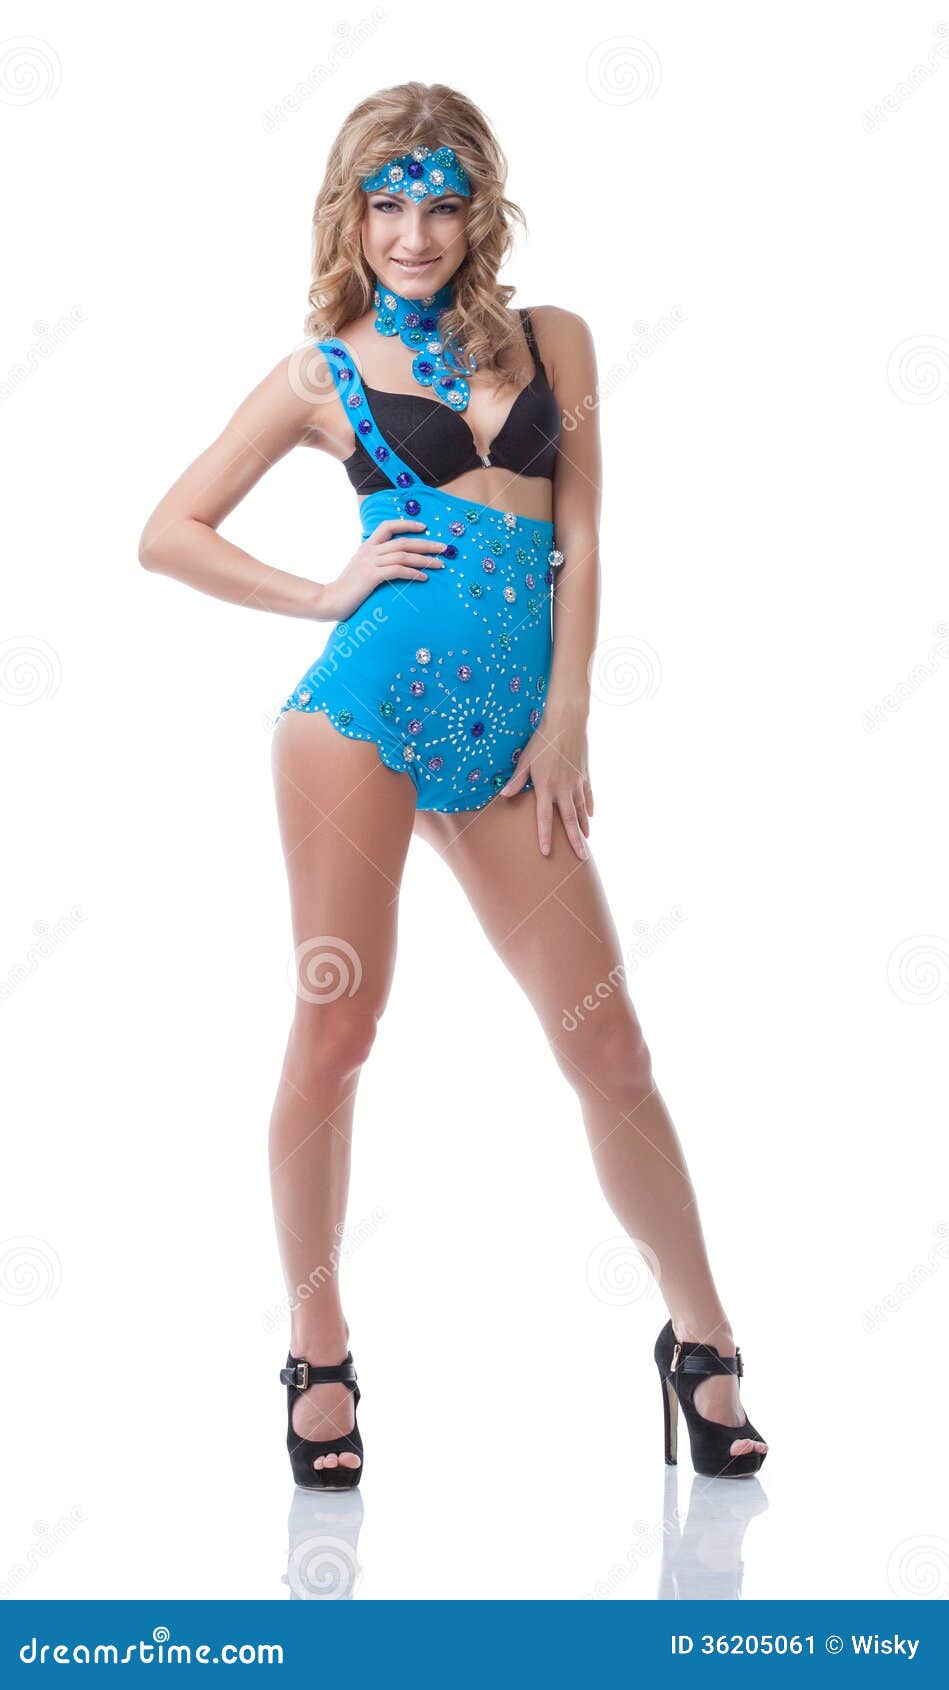 Playful Slim Model Posing in Blue Erotic Costume Stock Image